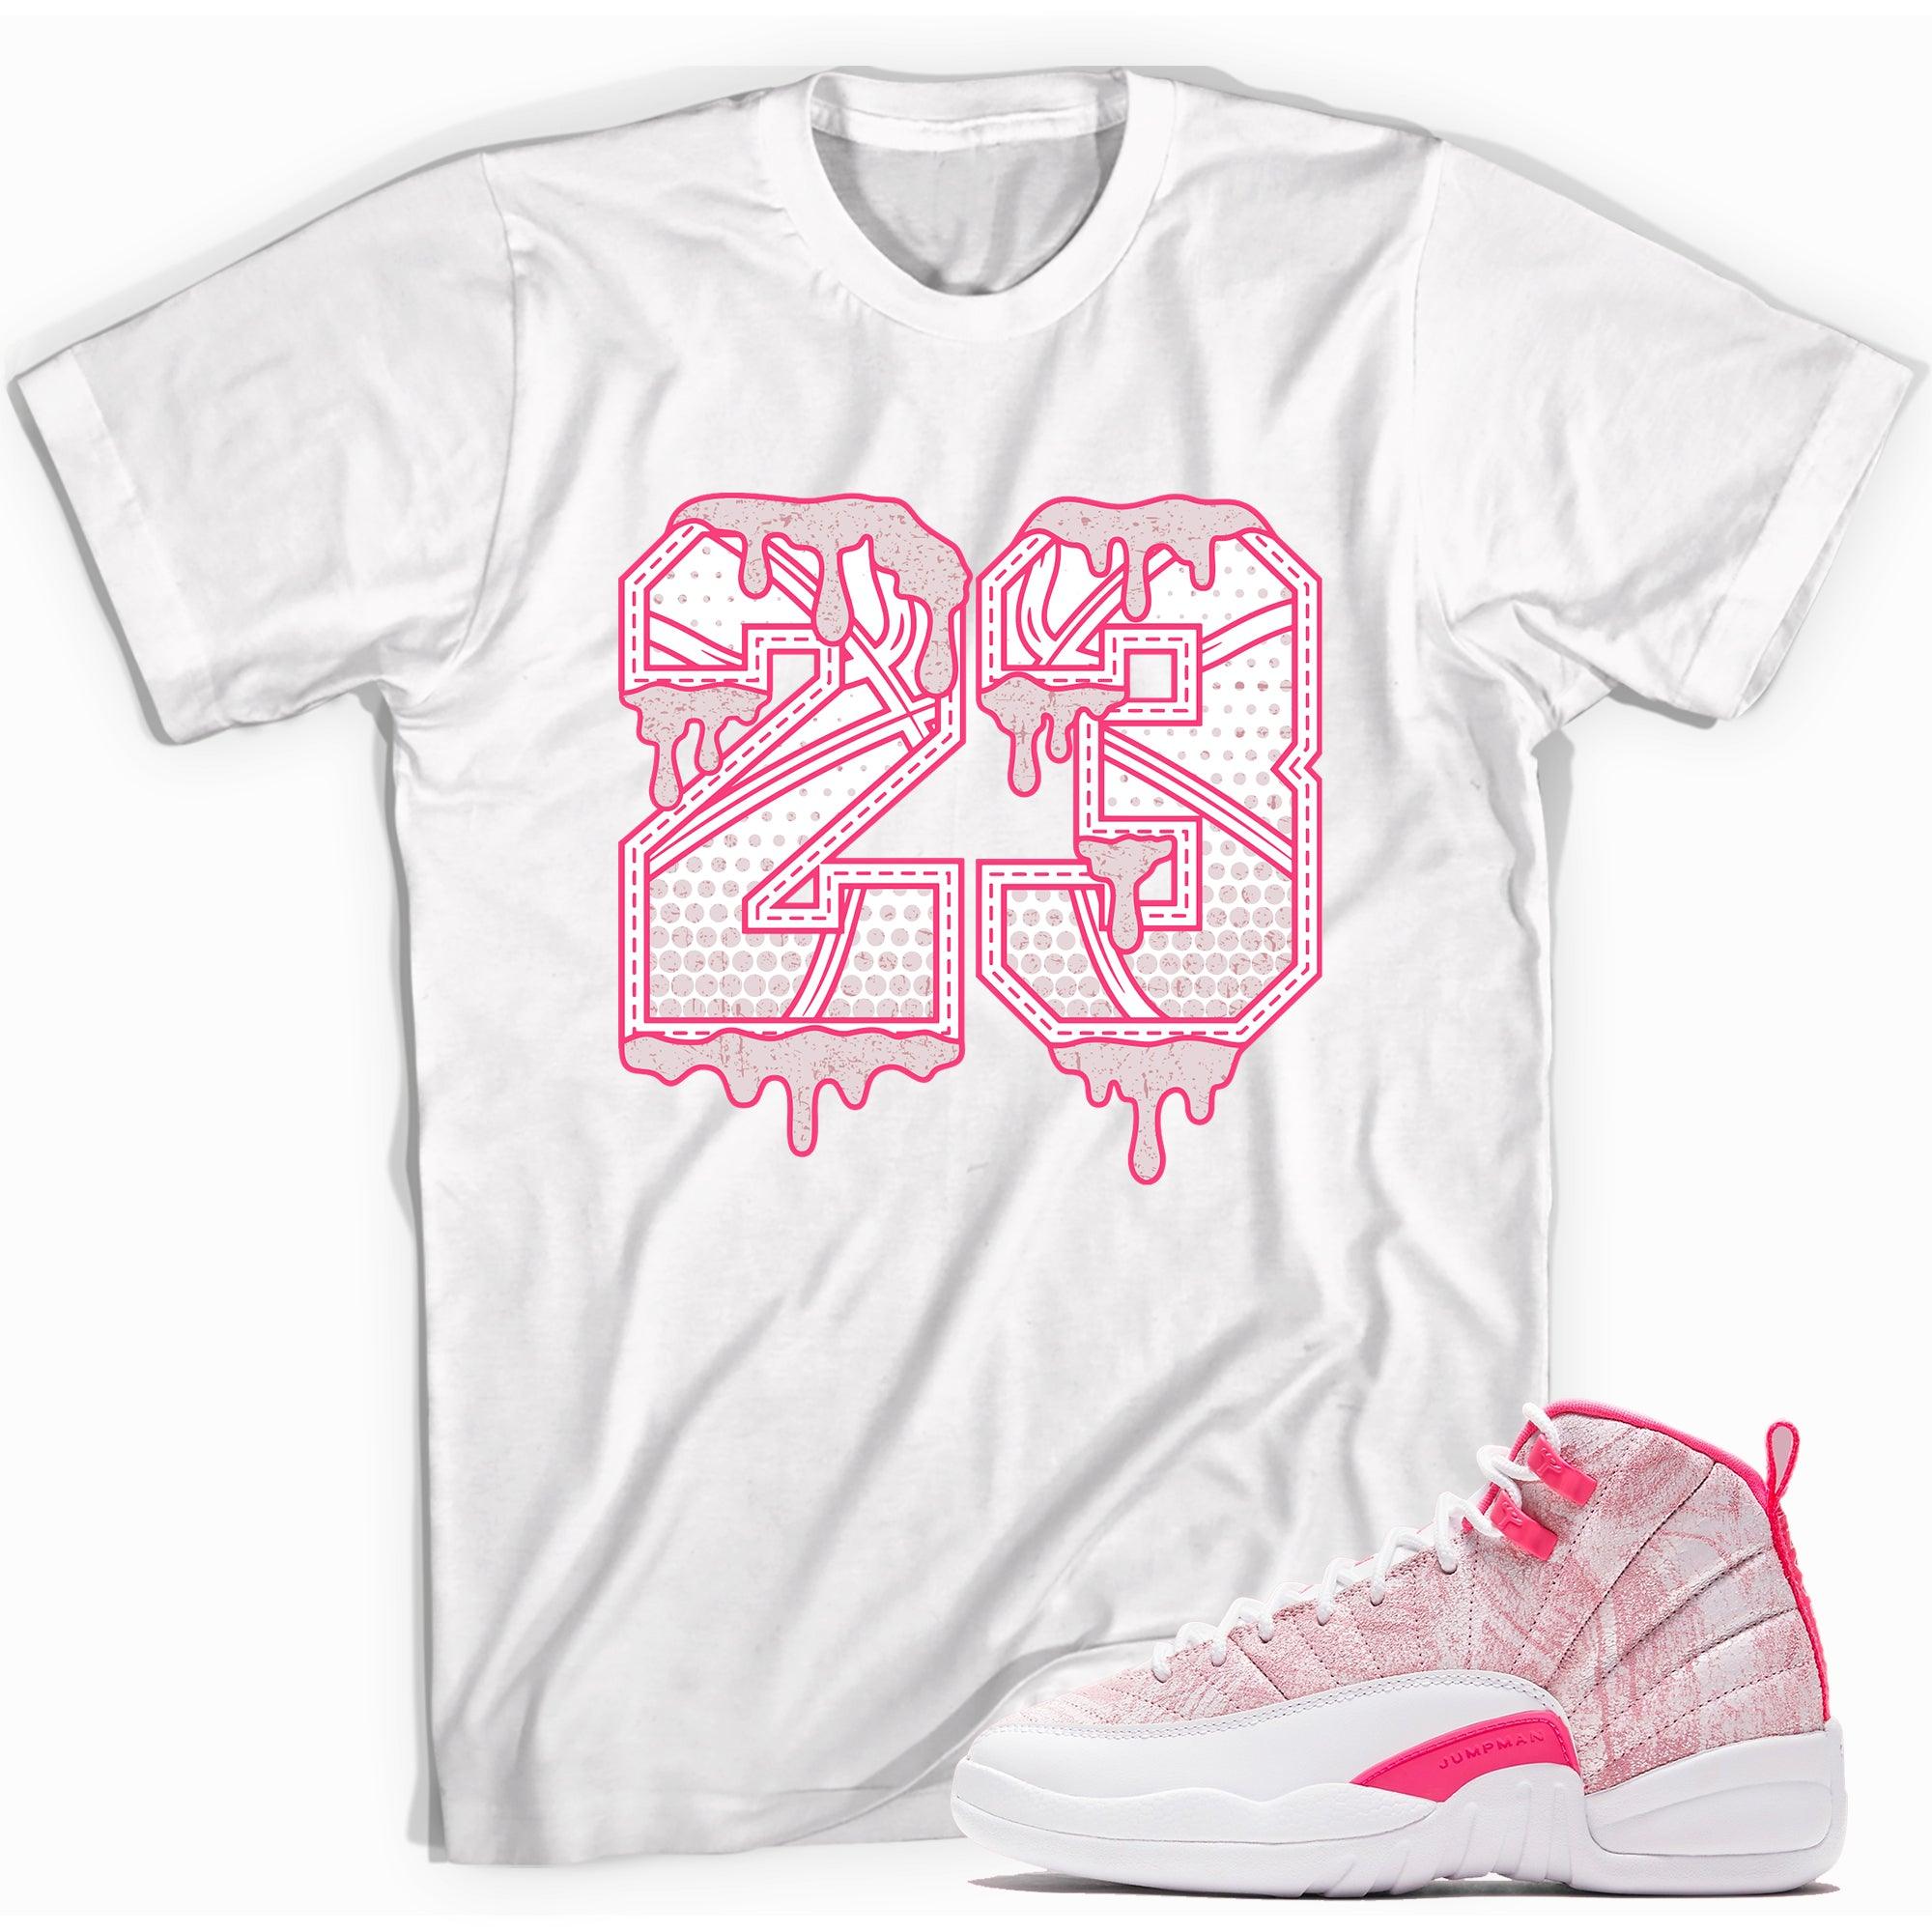 Number 23 Ball Shirt AJ 12 Retro Arctic Punch Hyper Pink